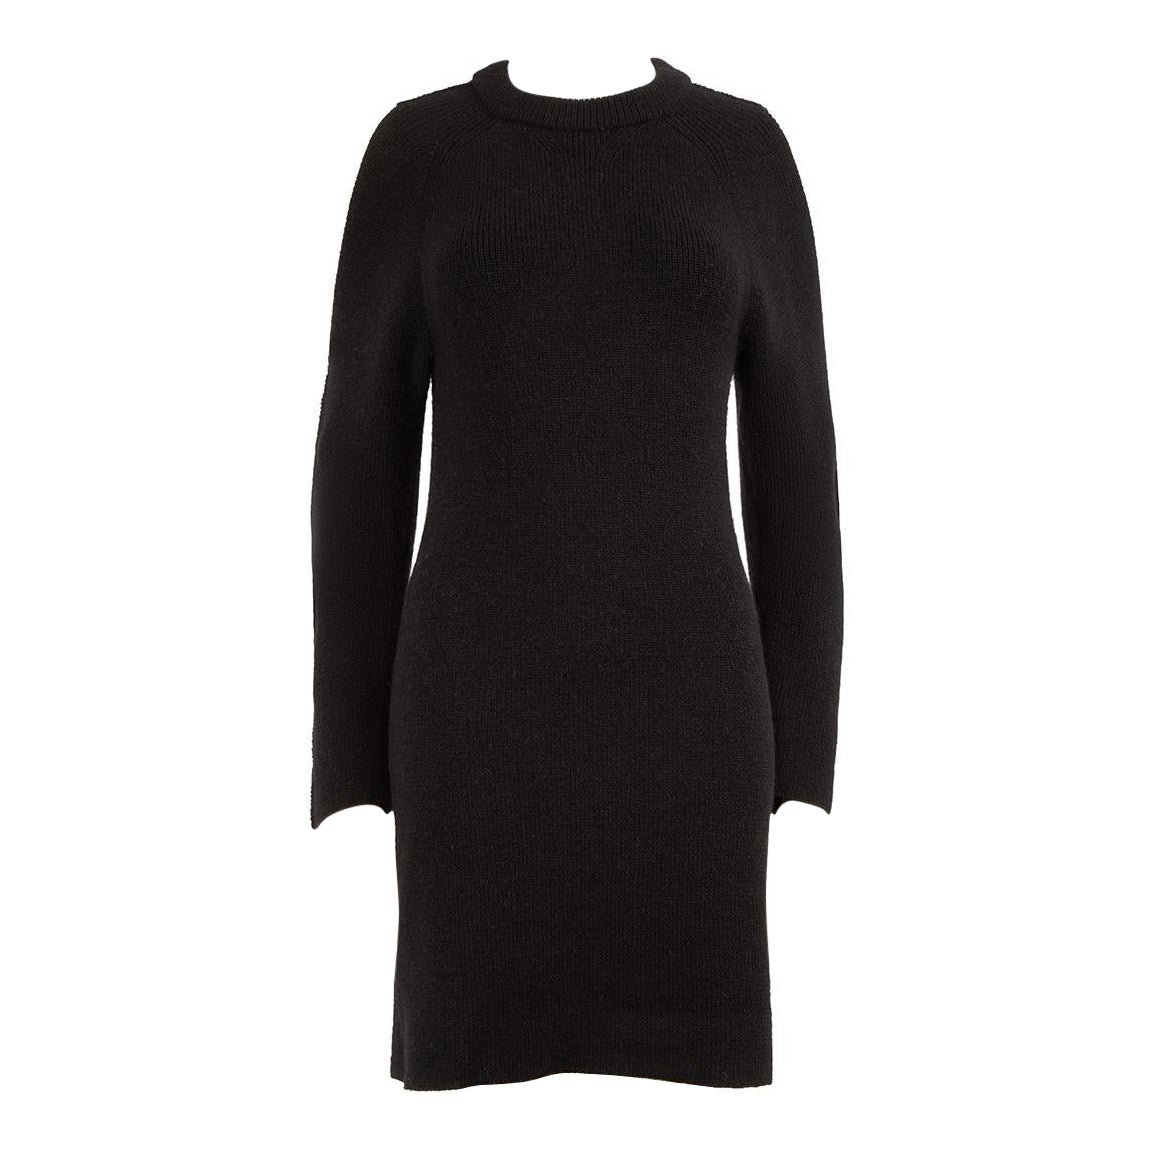 Chloé Black Wool Cold Shoulder Knit Dress Size XS For Sale